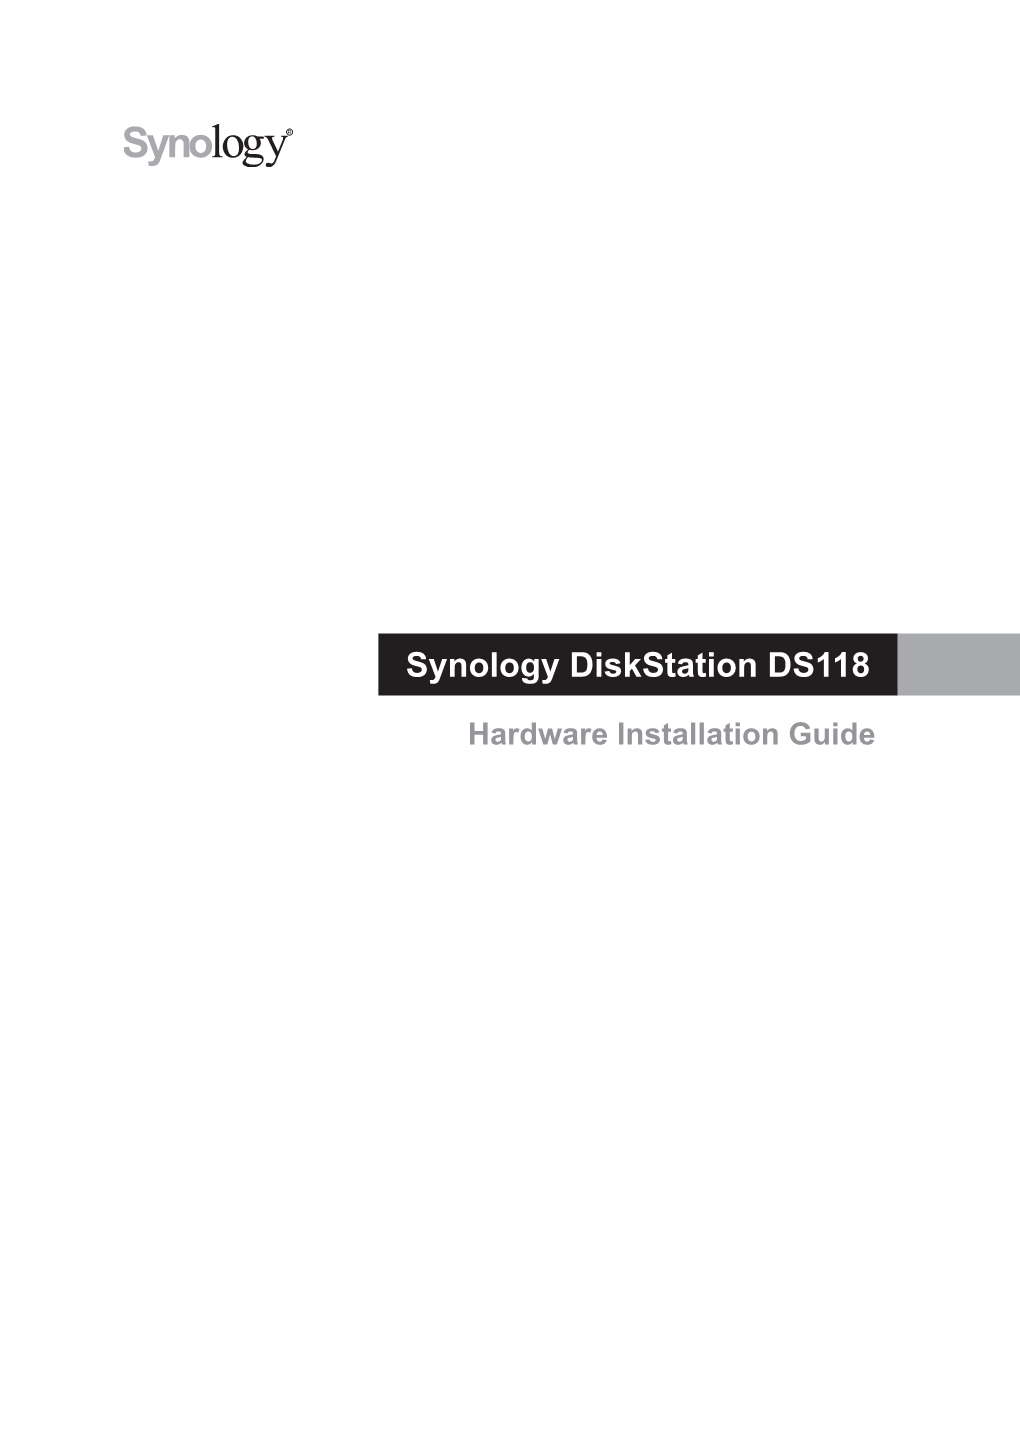 Synology Diskstation DS118 Hardware Installation Guide